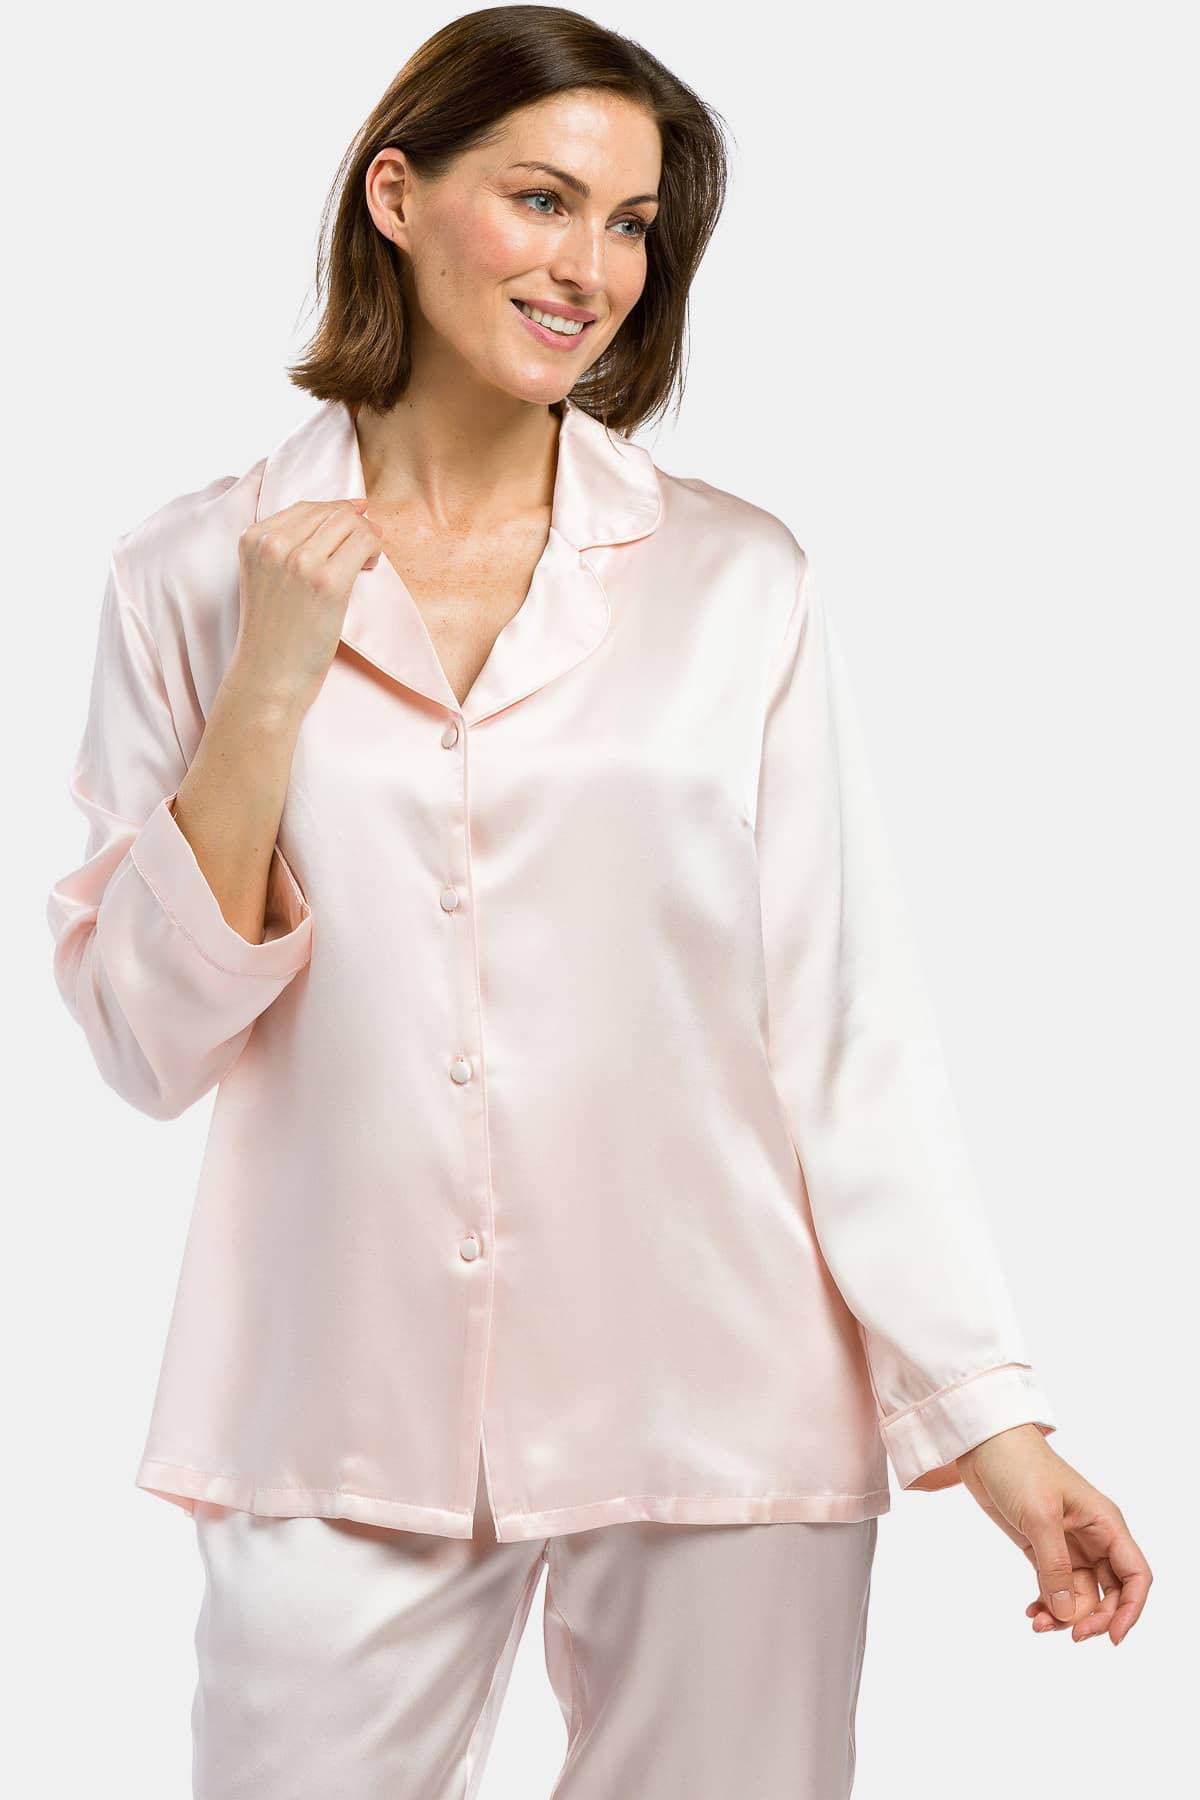 Mommesilk Silk Pajamas for Women Long Sleeve Washable 100% Real Mulberry  Silk Pj Sets Sleep Summer Nightwear